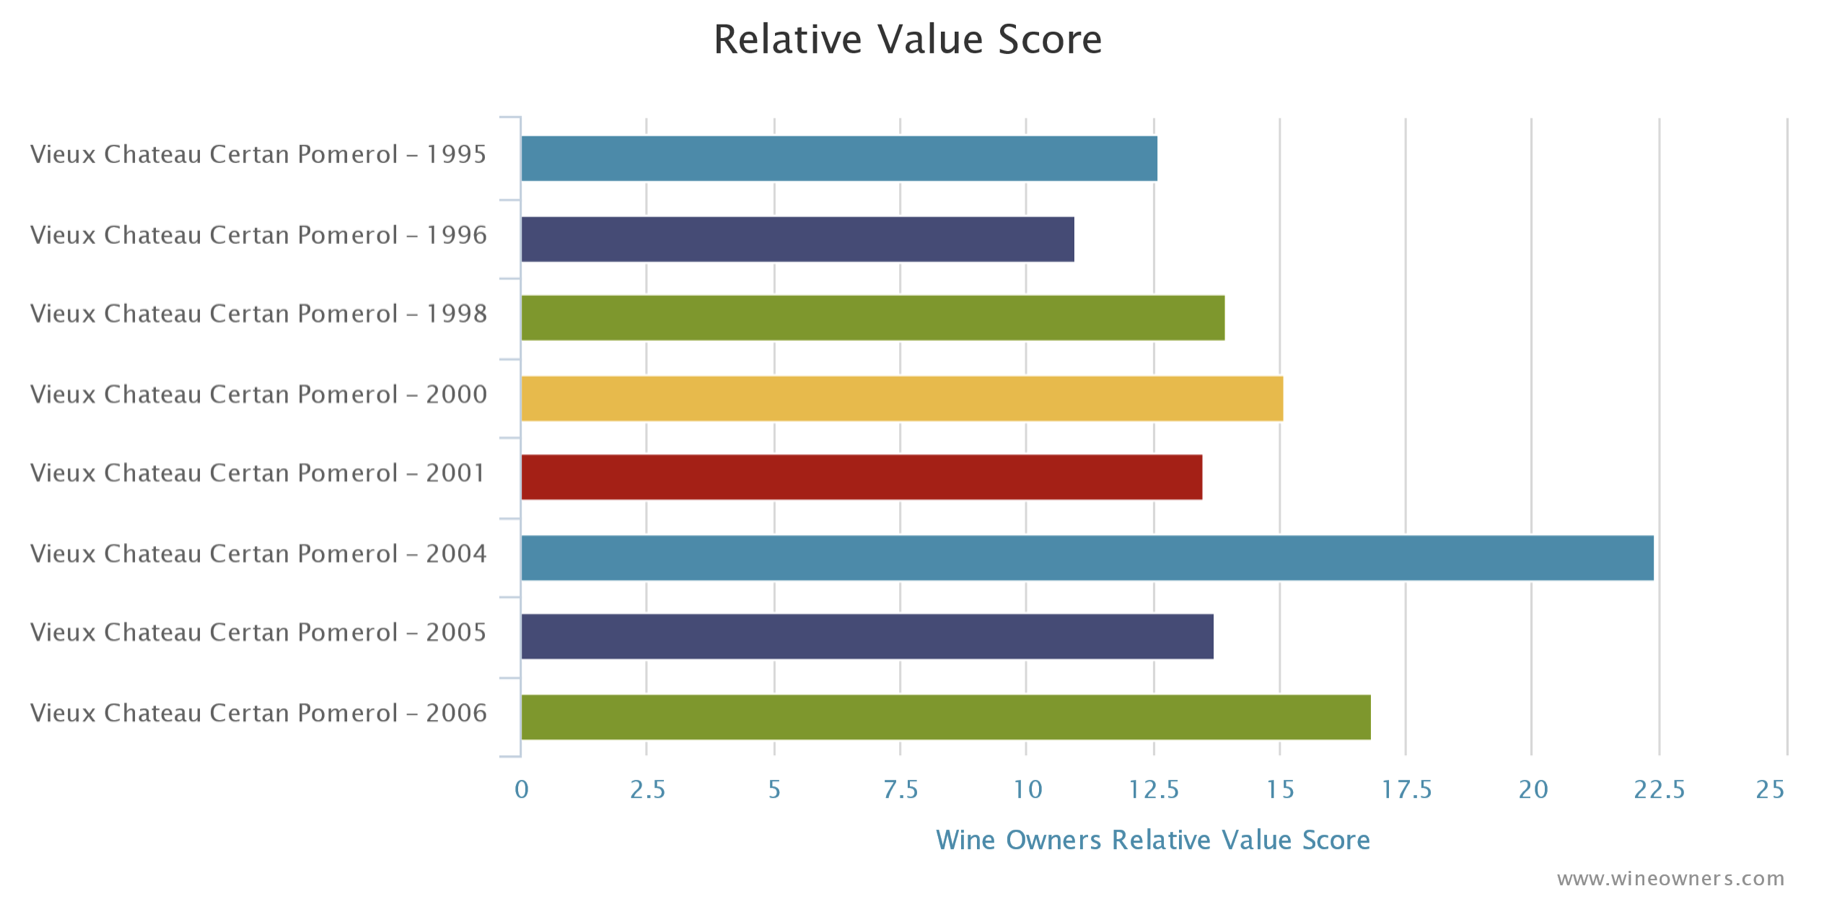 Vieux Chateau Certan - Relative Value Score - Wine Owners